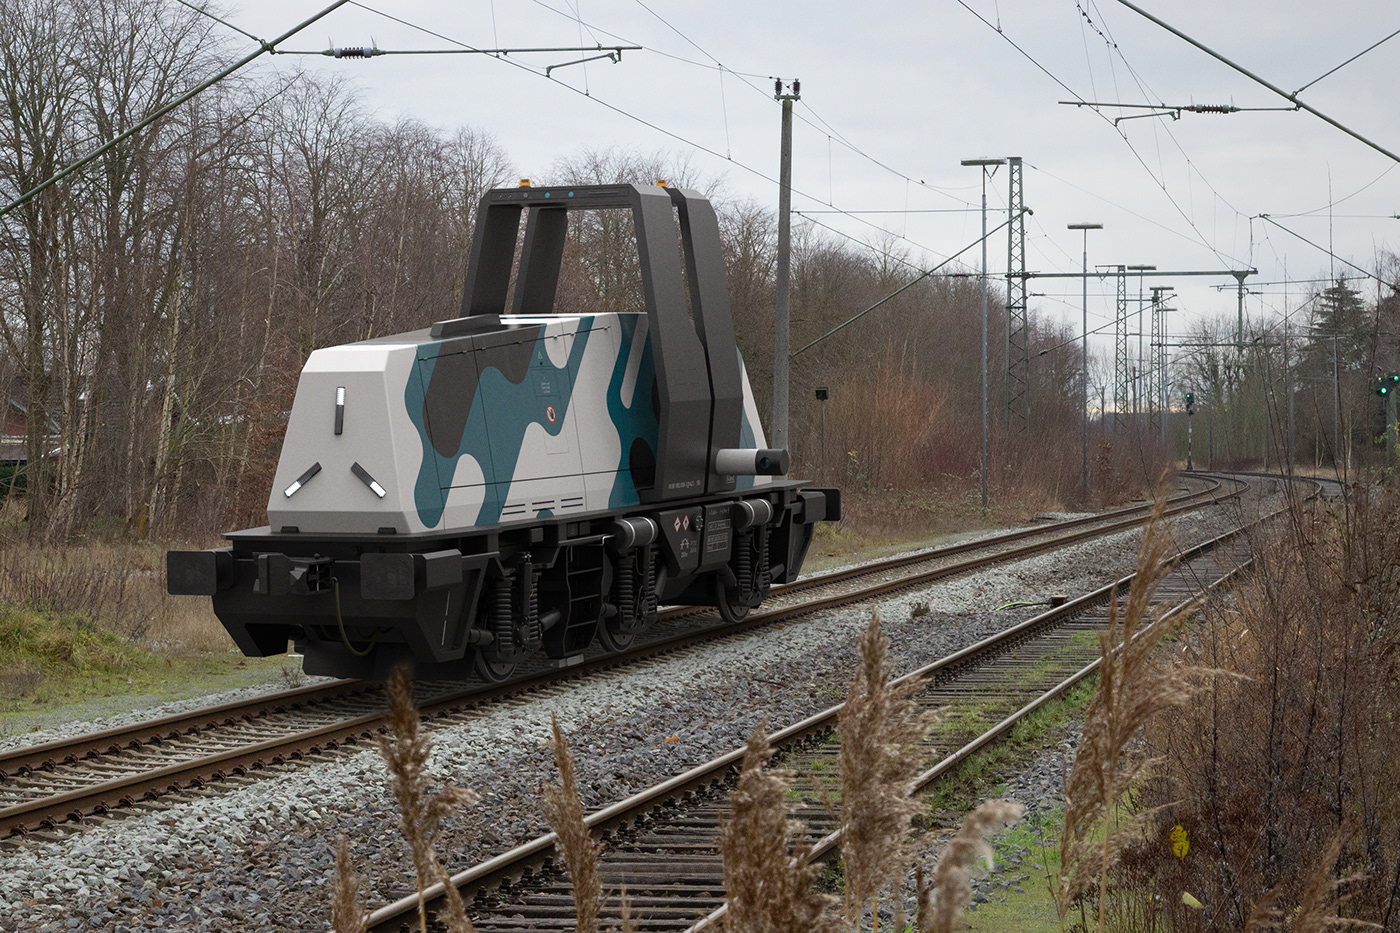 locomotive rail shunter shifter Hydrogen drone robot train transportation Autonomous